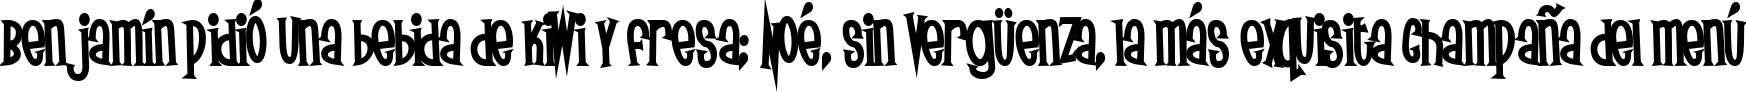 Пример написания шрифтом Surf Safari текста на испанском